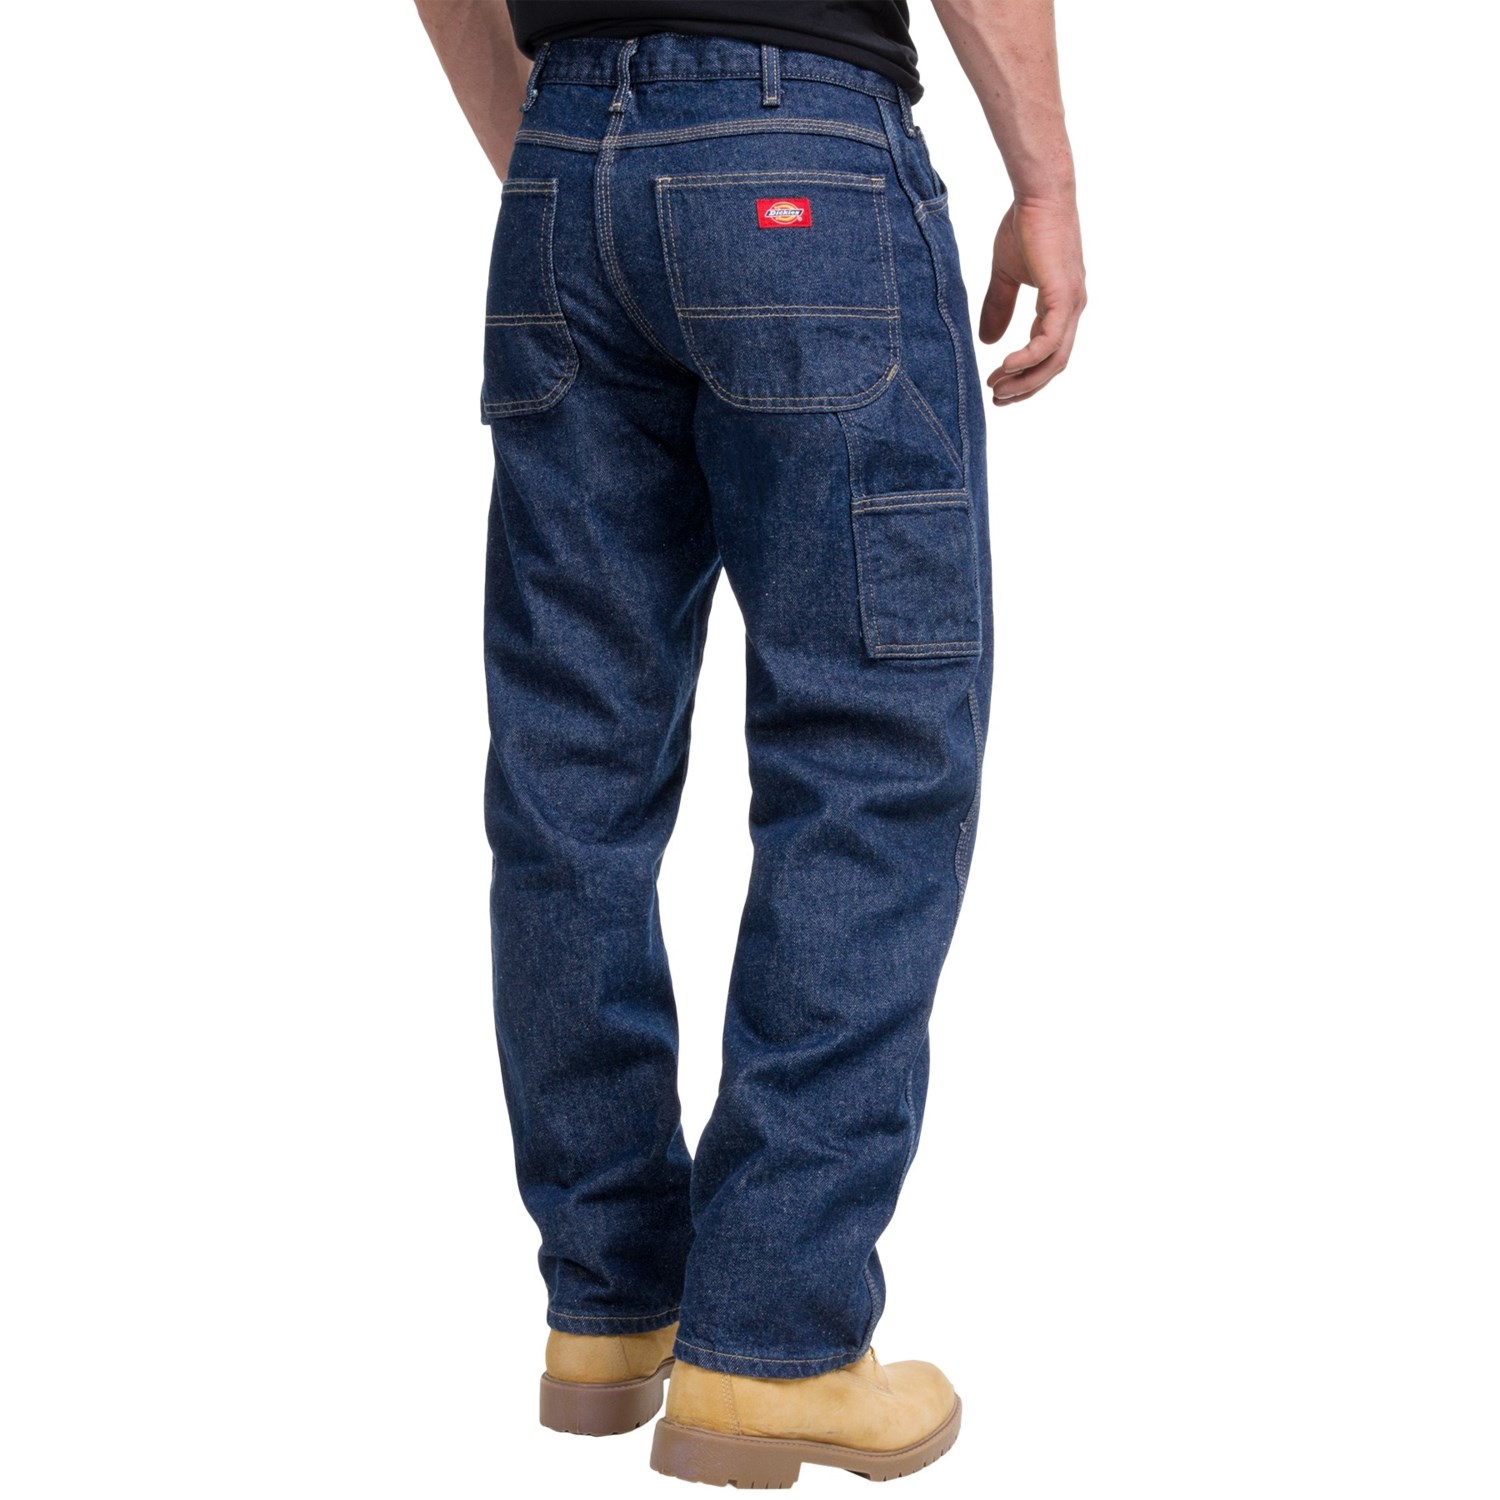 Dickies Industrial Carpenter Jeans (For Men) - Save 60%